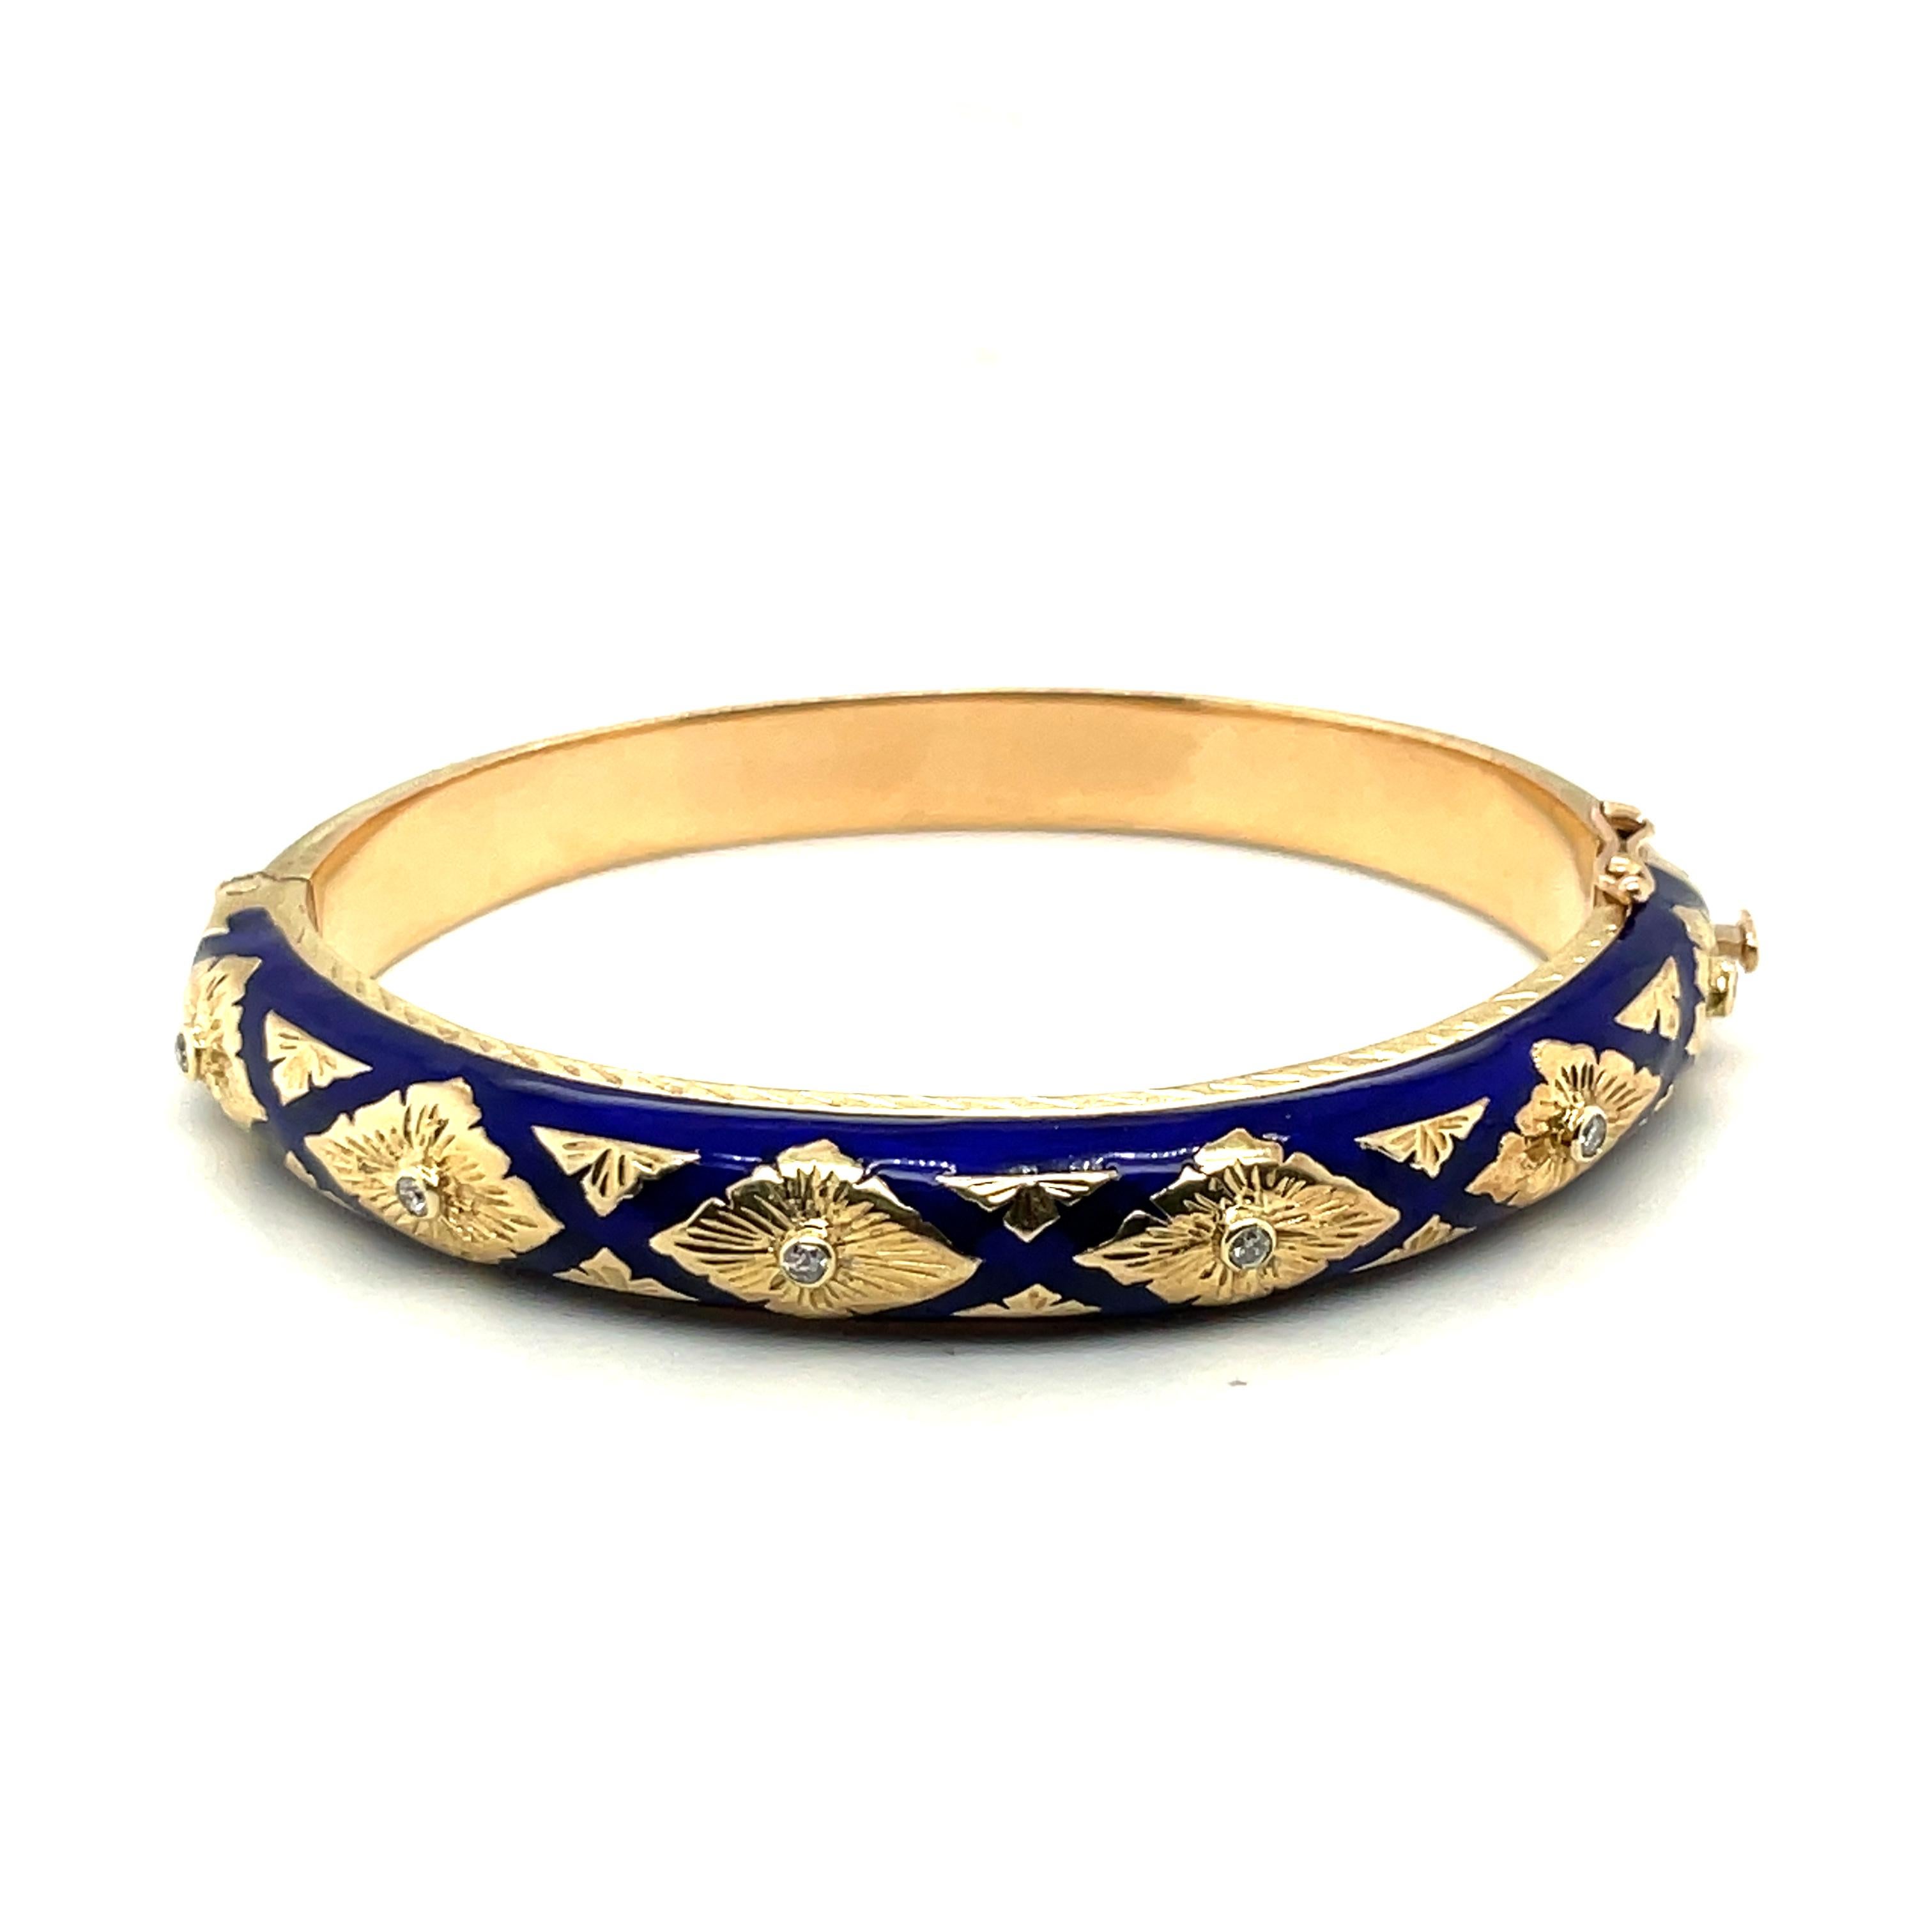 14K Yellow Gold Diamond & Blue Enamel Bangle Bracelet

Weight 38.8 Grams